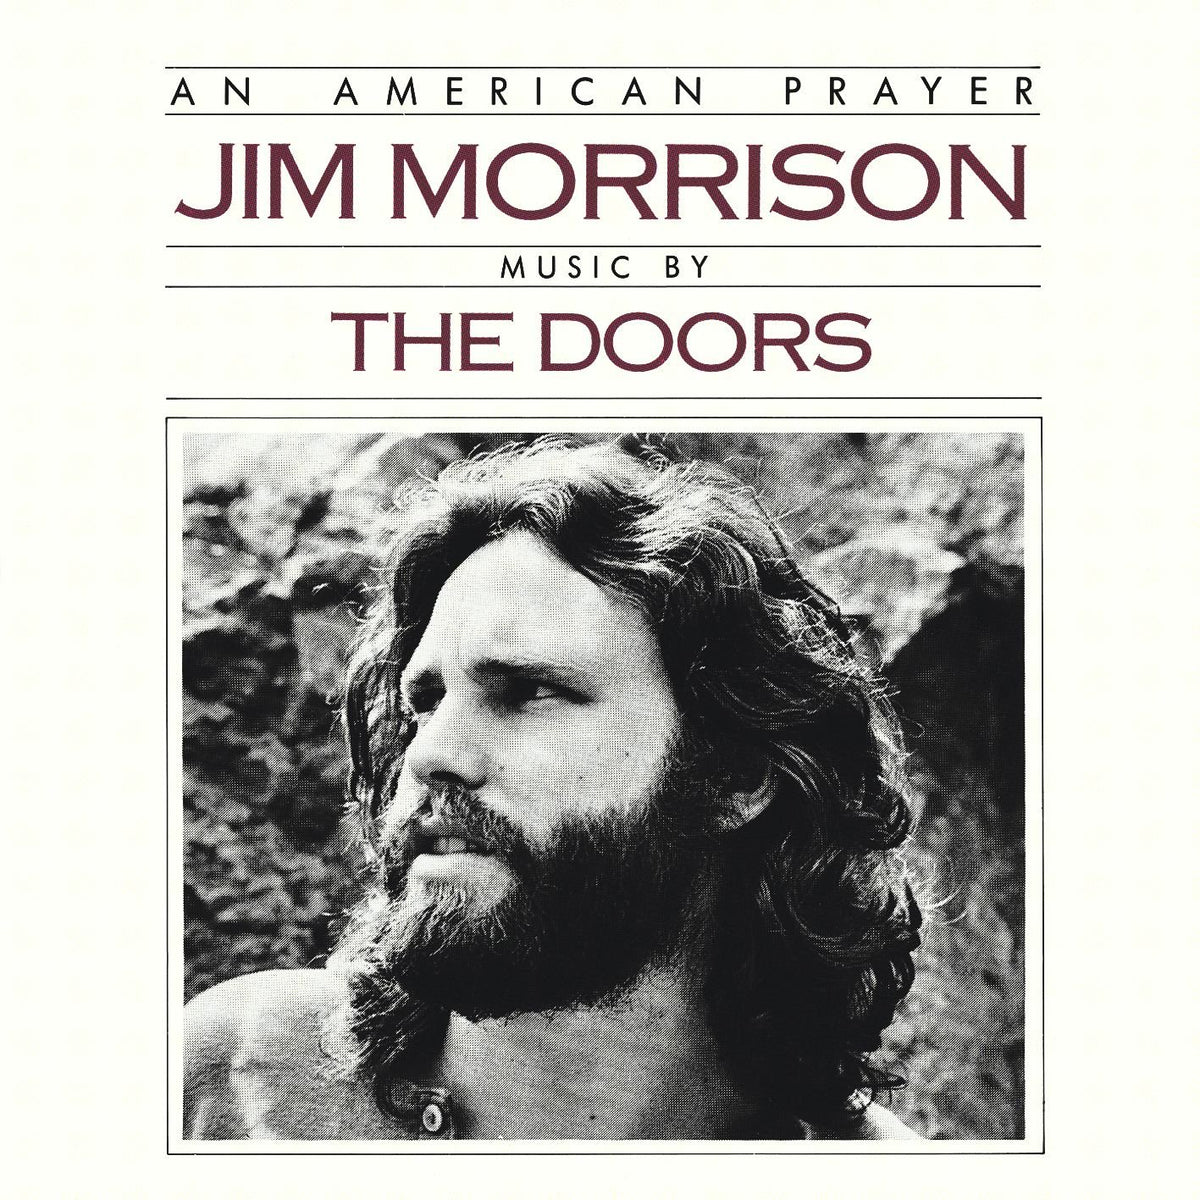 Jim Morrison - An American Prayer (Music By The Doors)